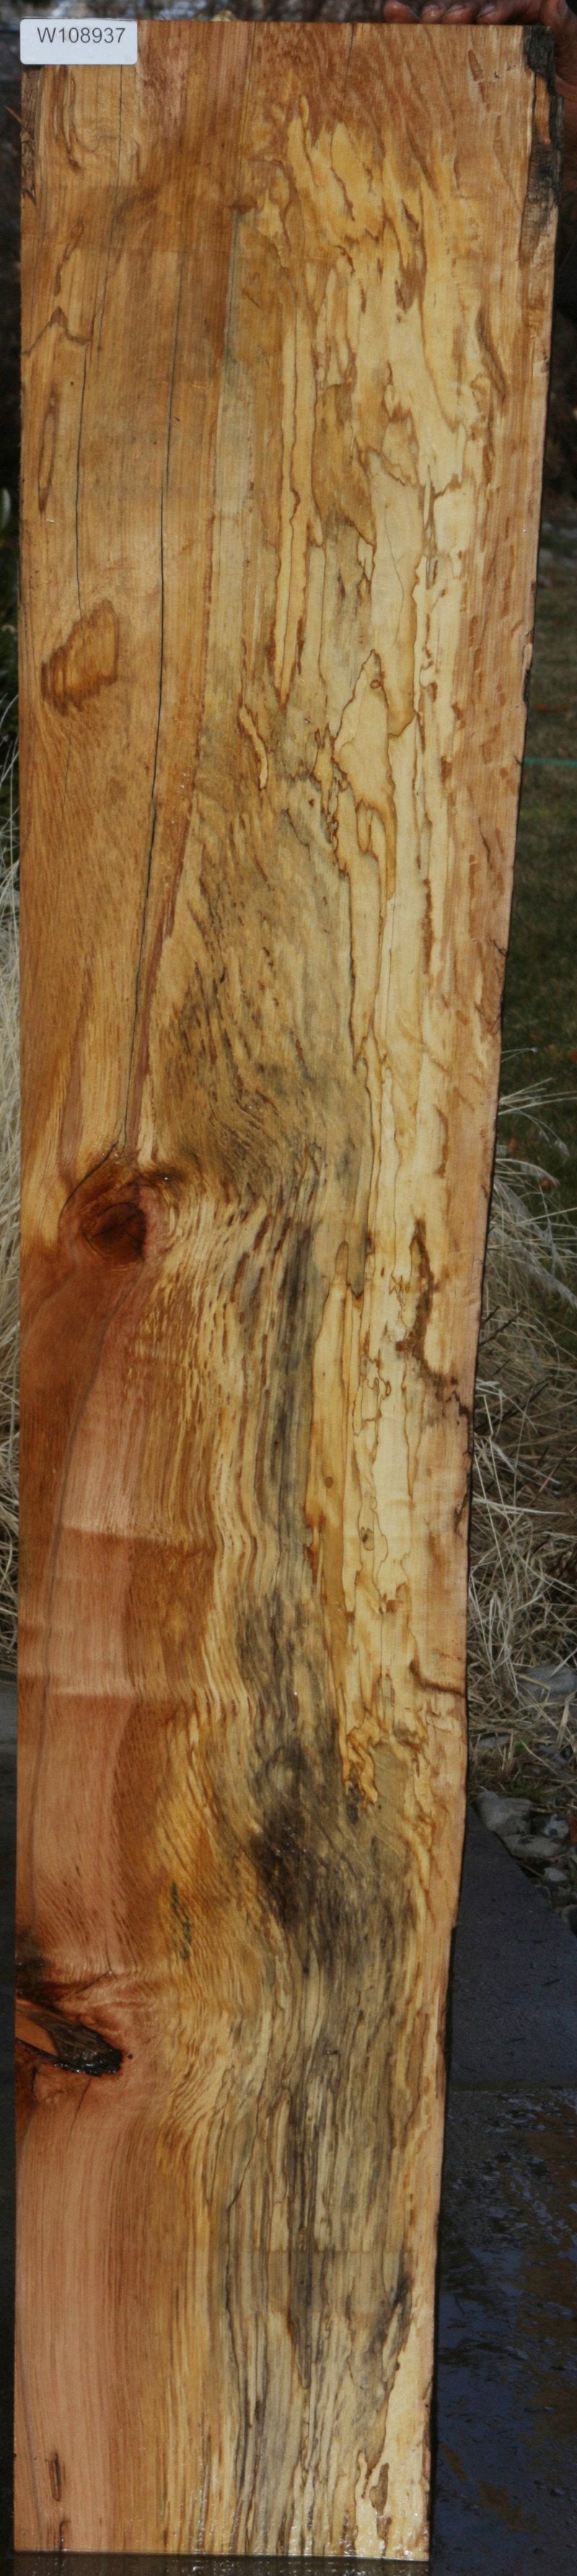 Spalted Natural Rustic Black Oak Mantel